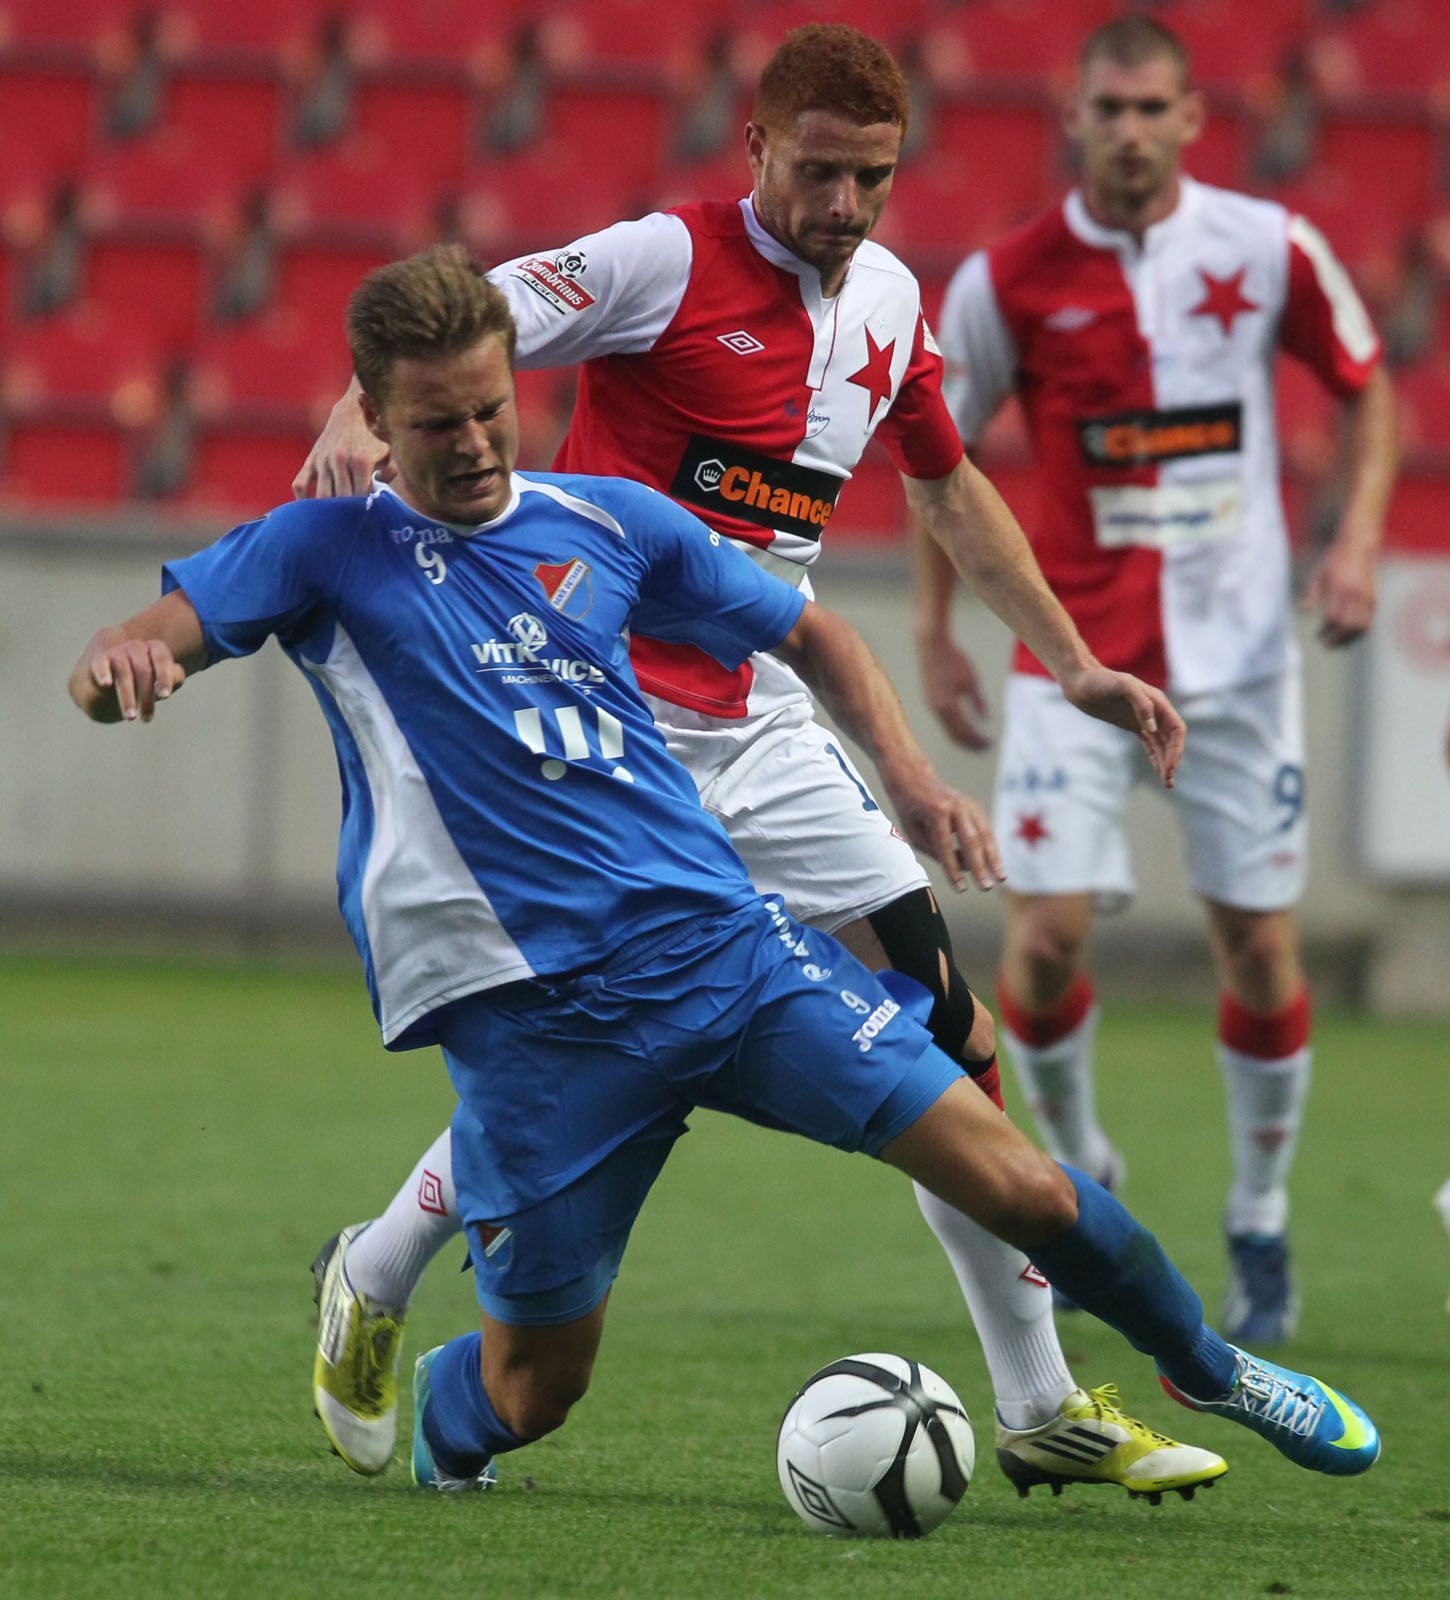 Slavia - Ostrava: Marcel Gecov, Dominik Kraut